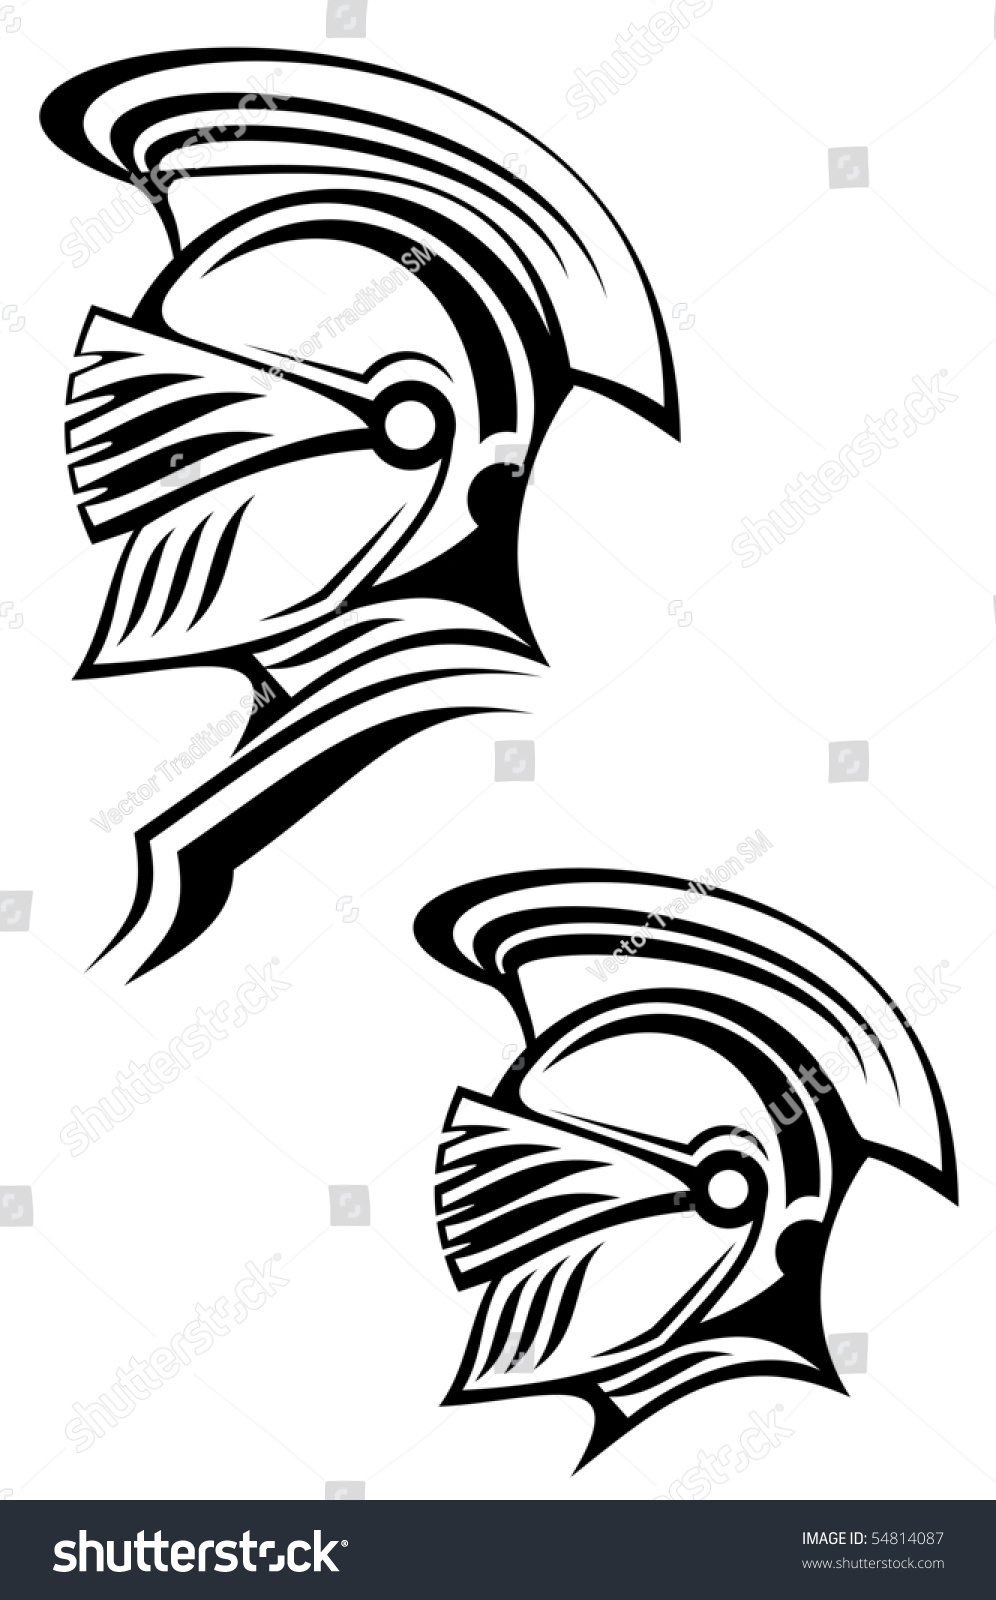 Warrior symbols